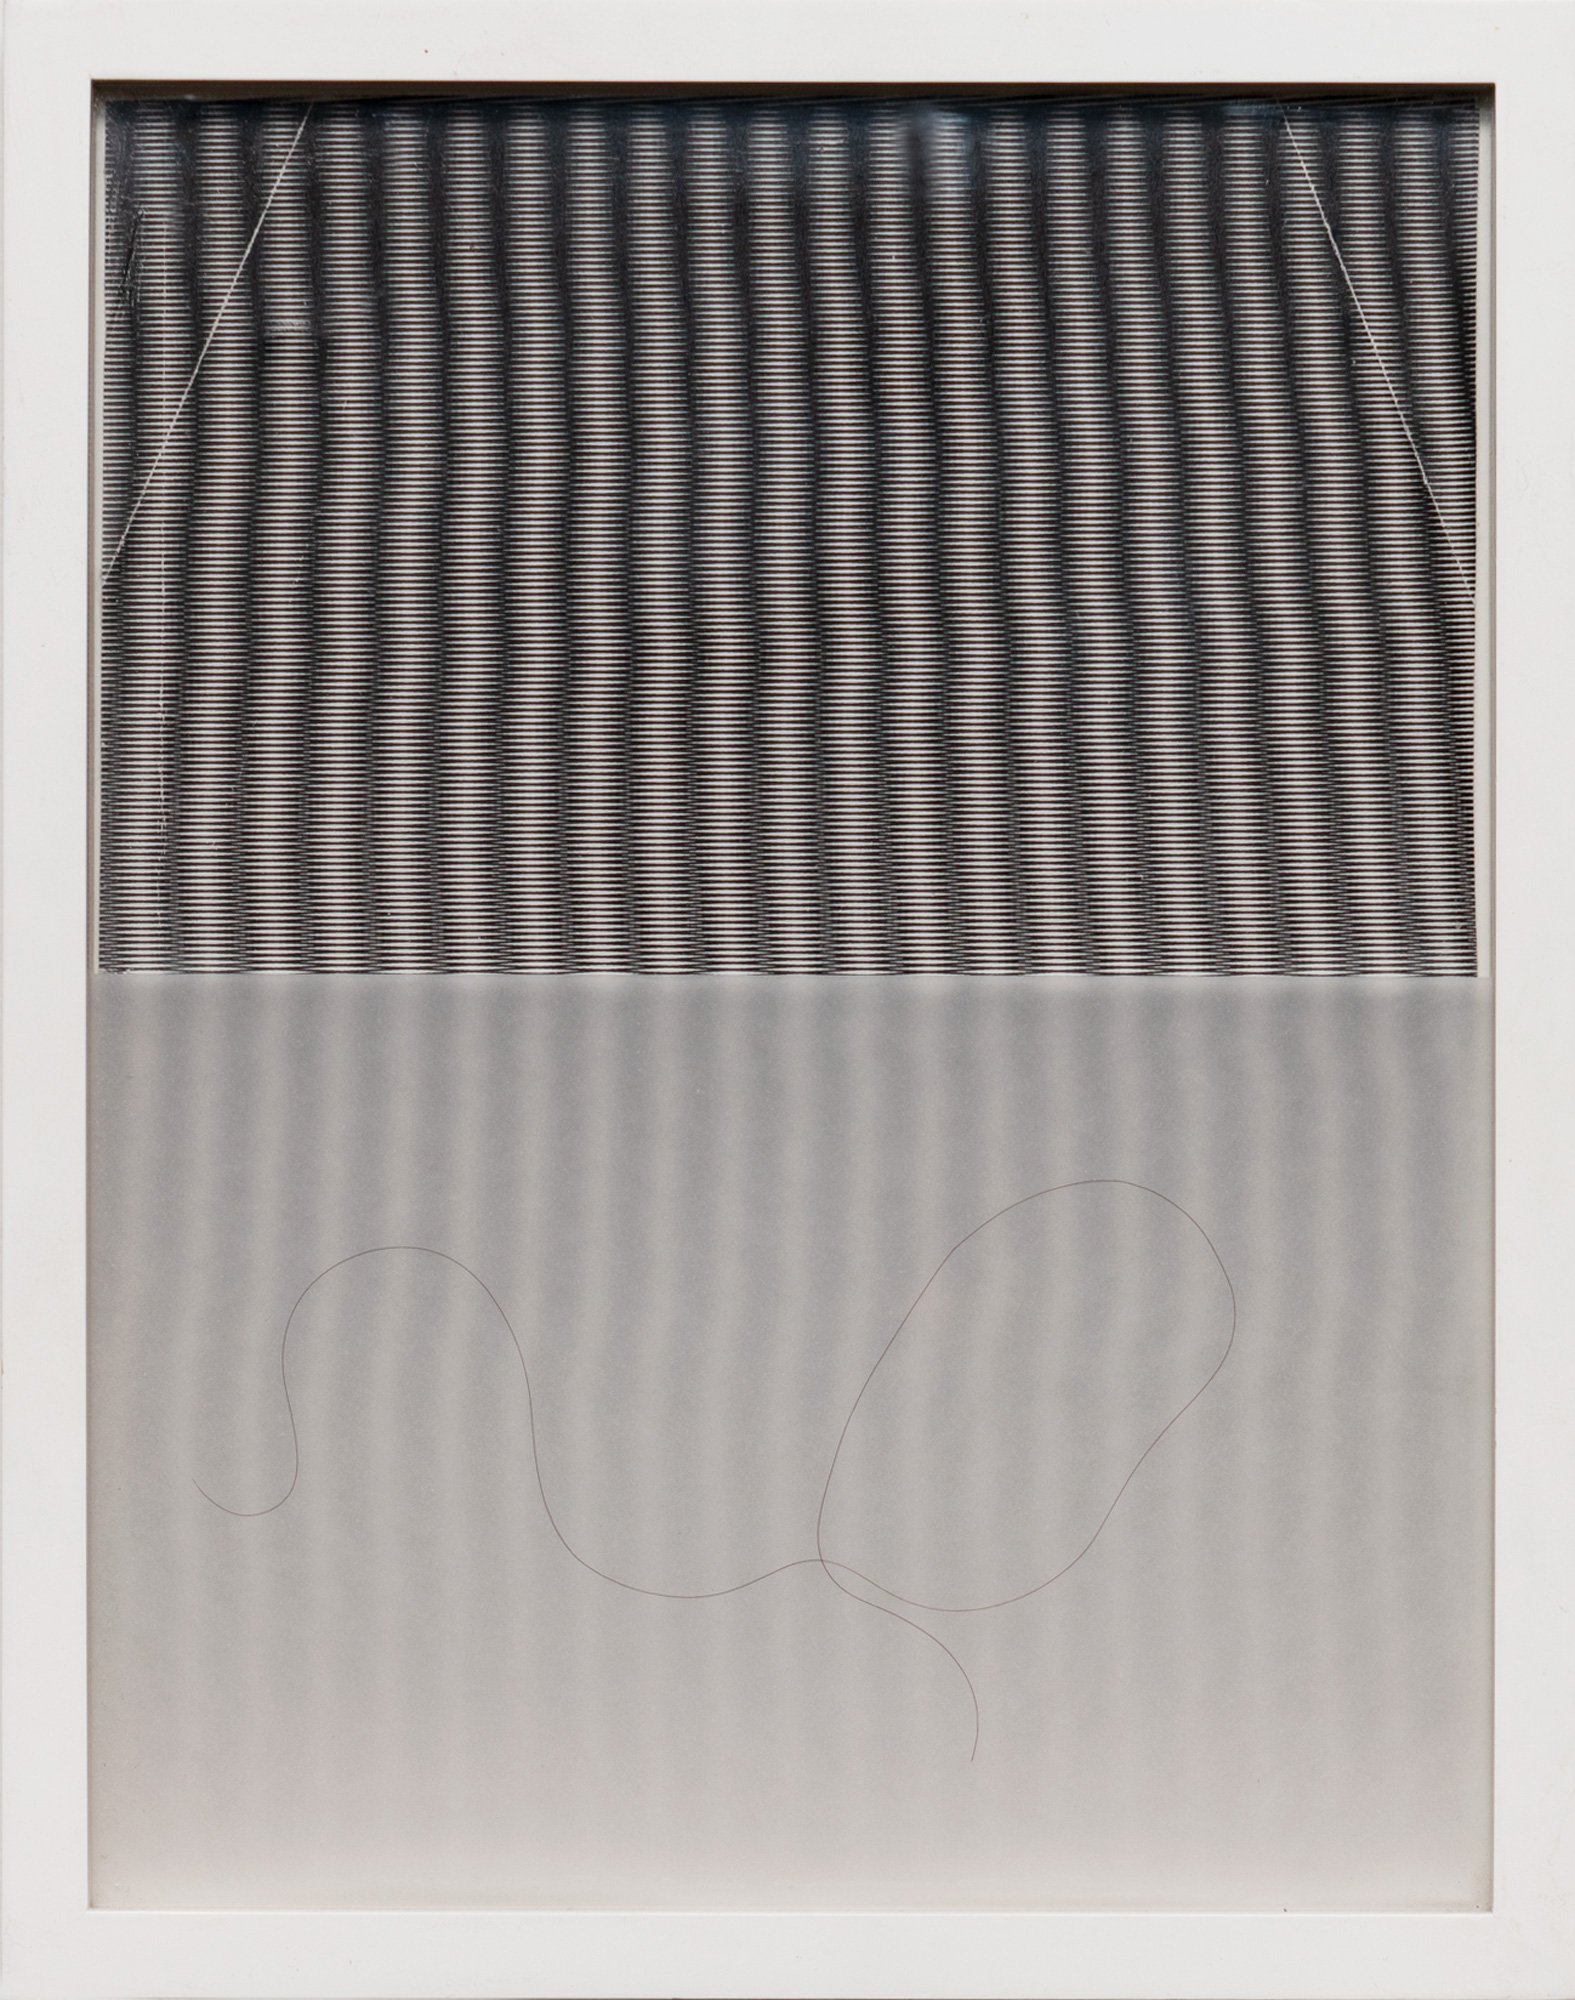    Untitled Construction #1   2010, laser print, vellum, human hair, glass 8.5” x 11” 